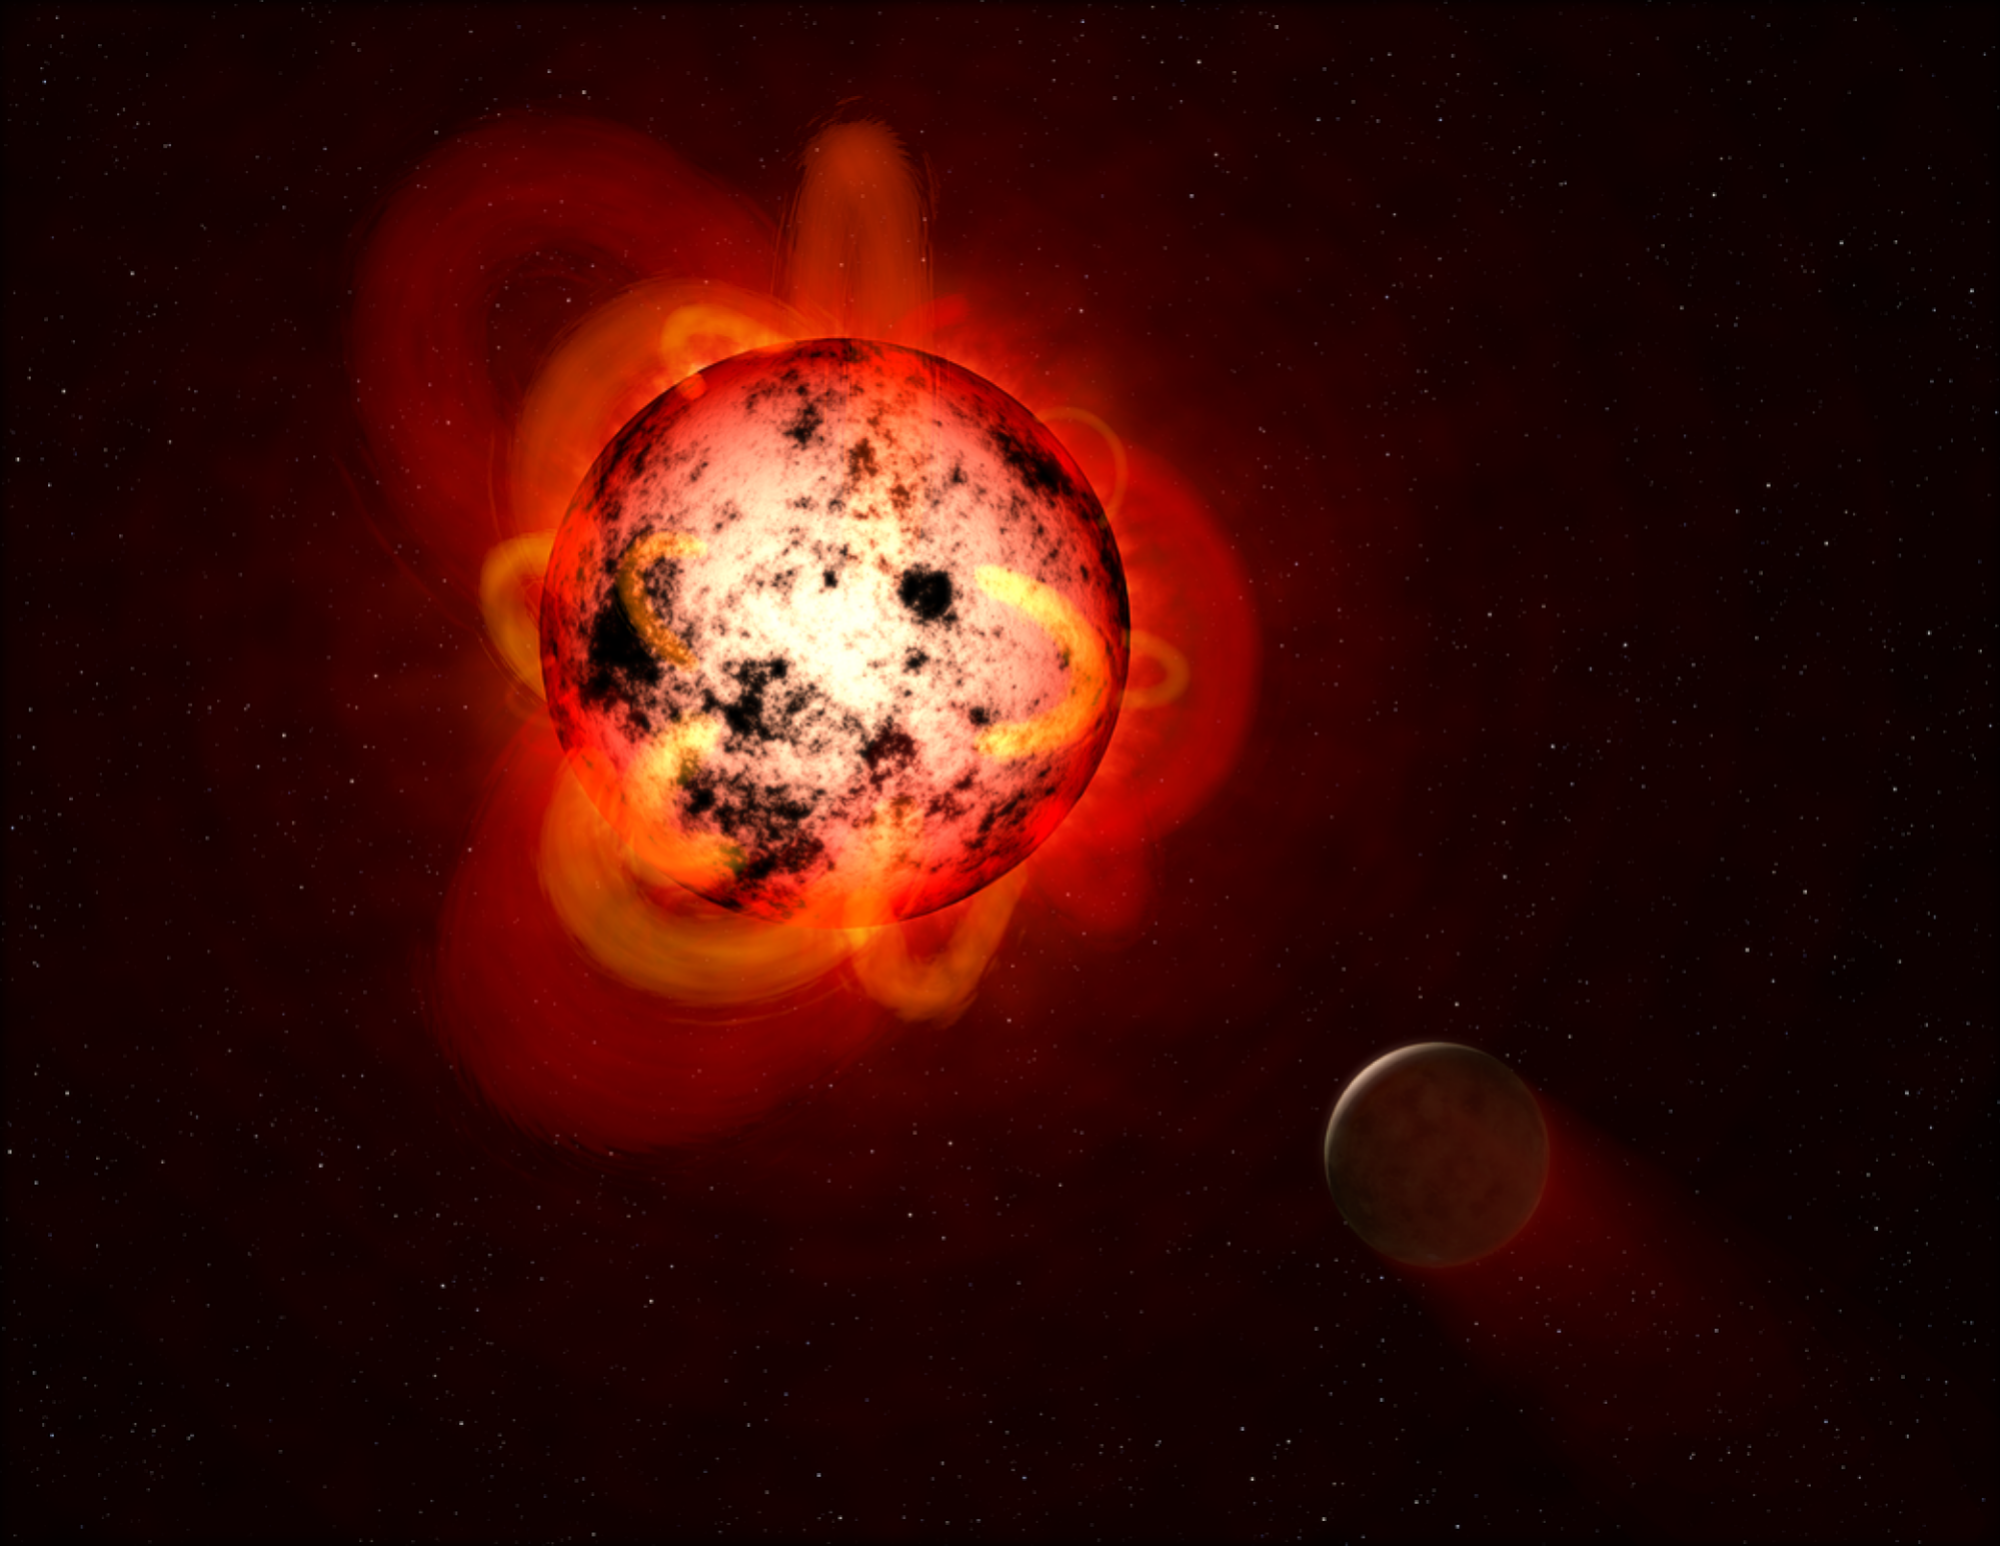 Rocky exoplanet orbiting a red dwarf star